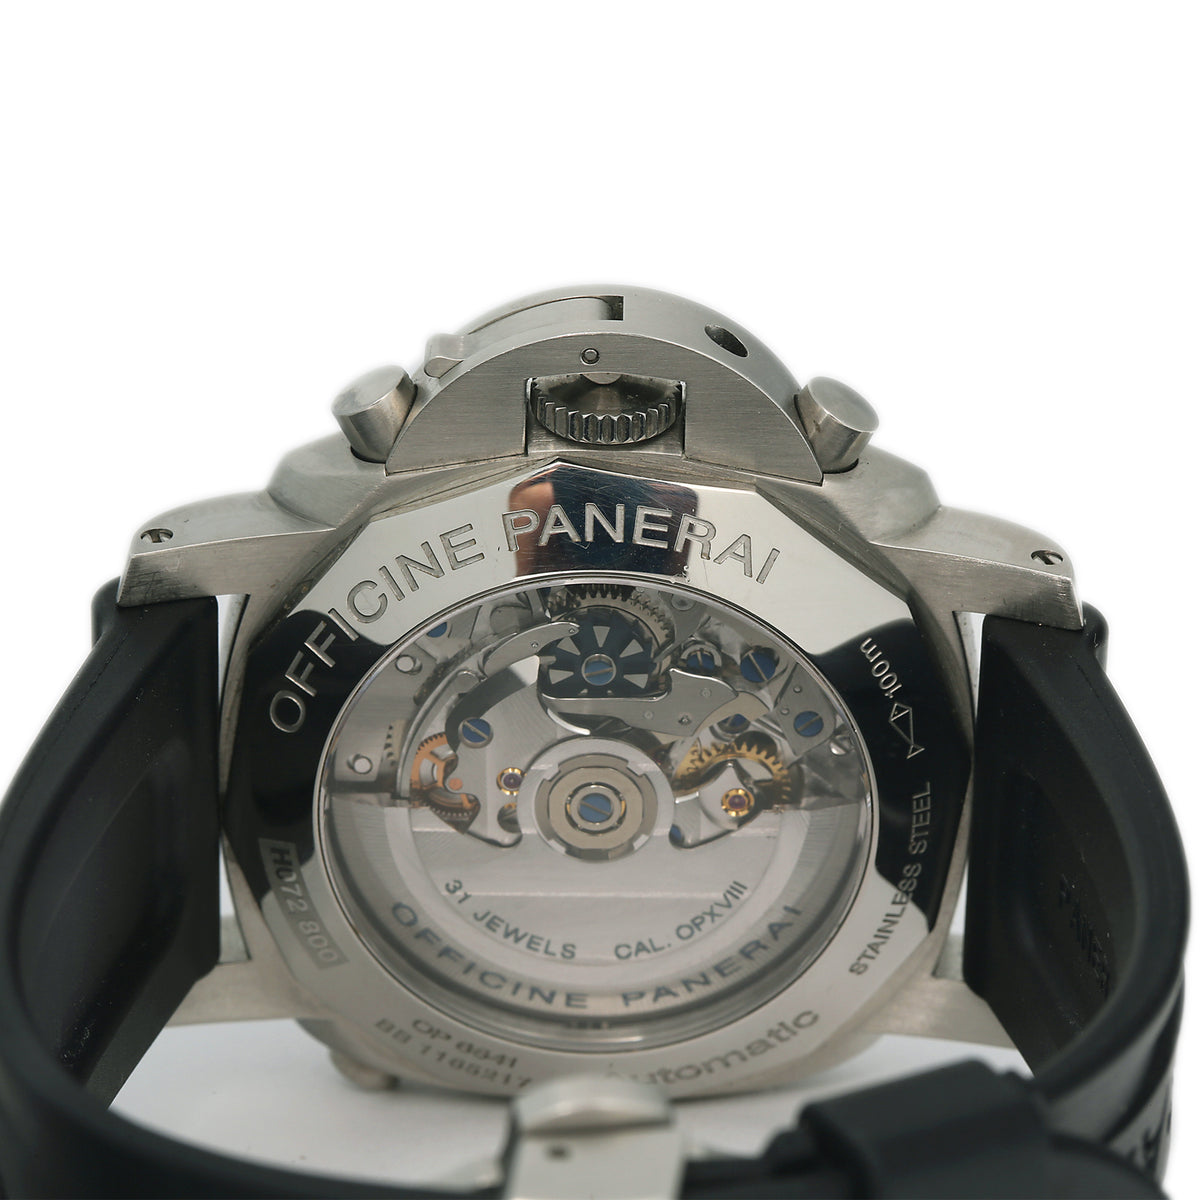 Panerai Luminor 1950 PAM00213 Rattrapante Steel Chronograph Watch 44mm Complete